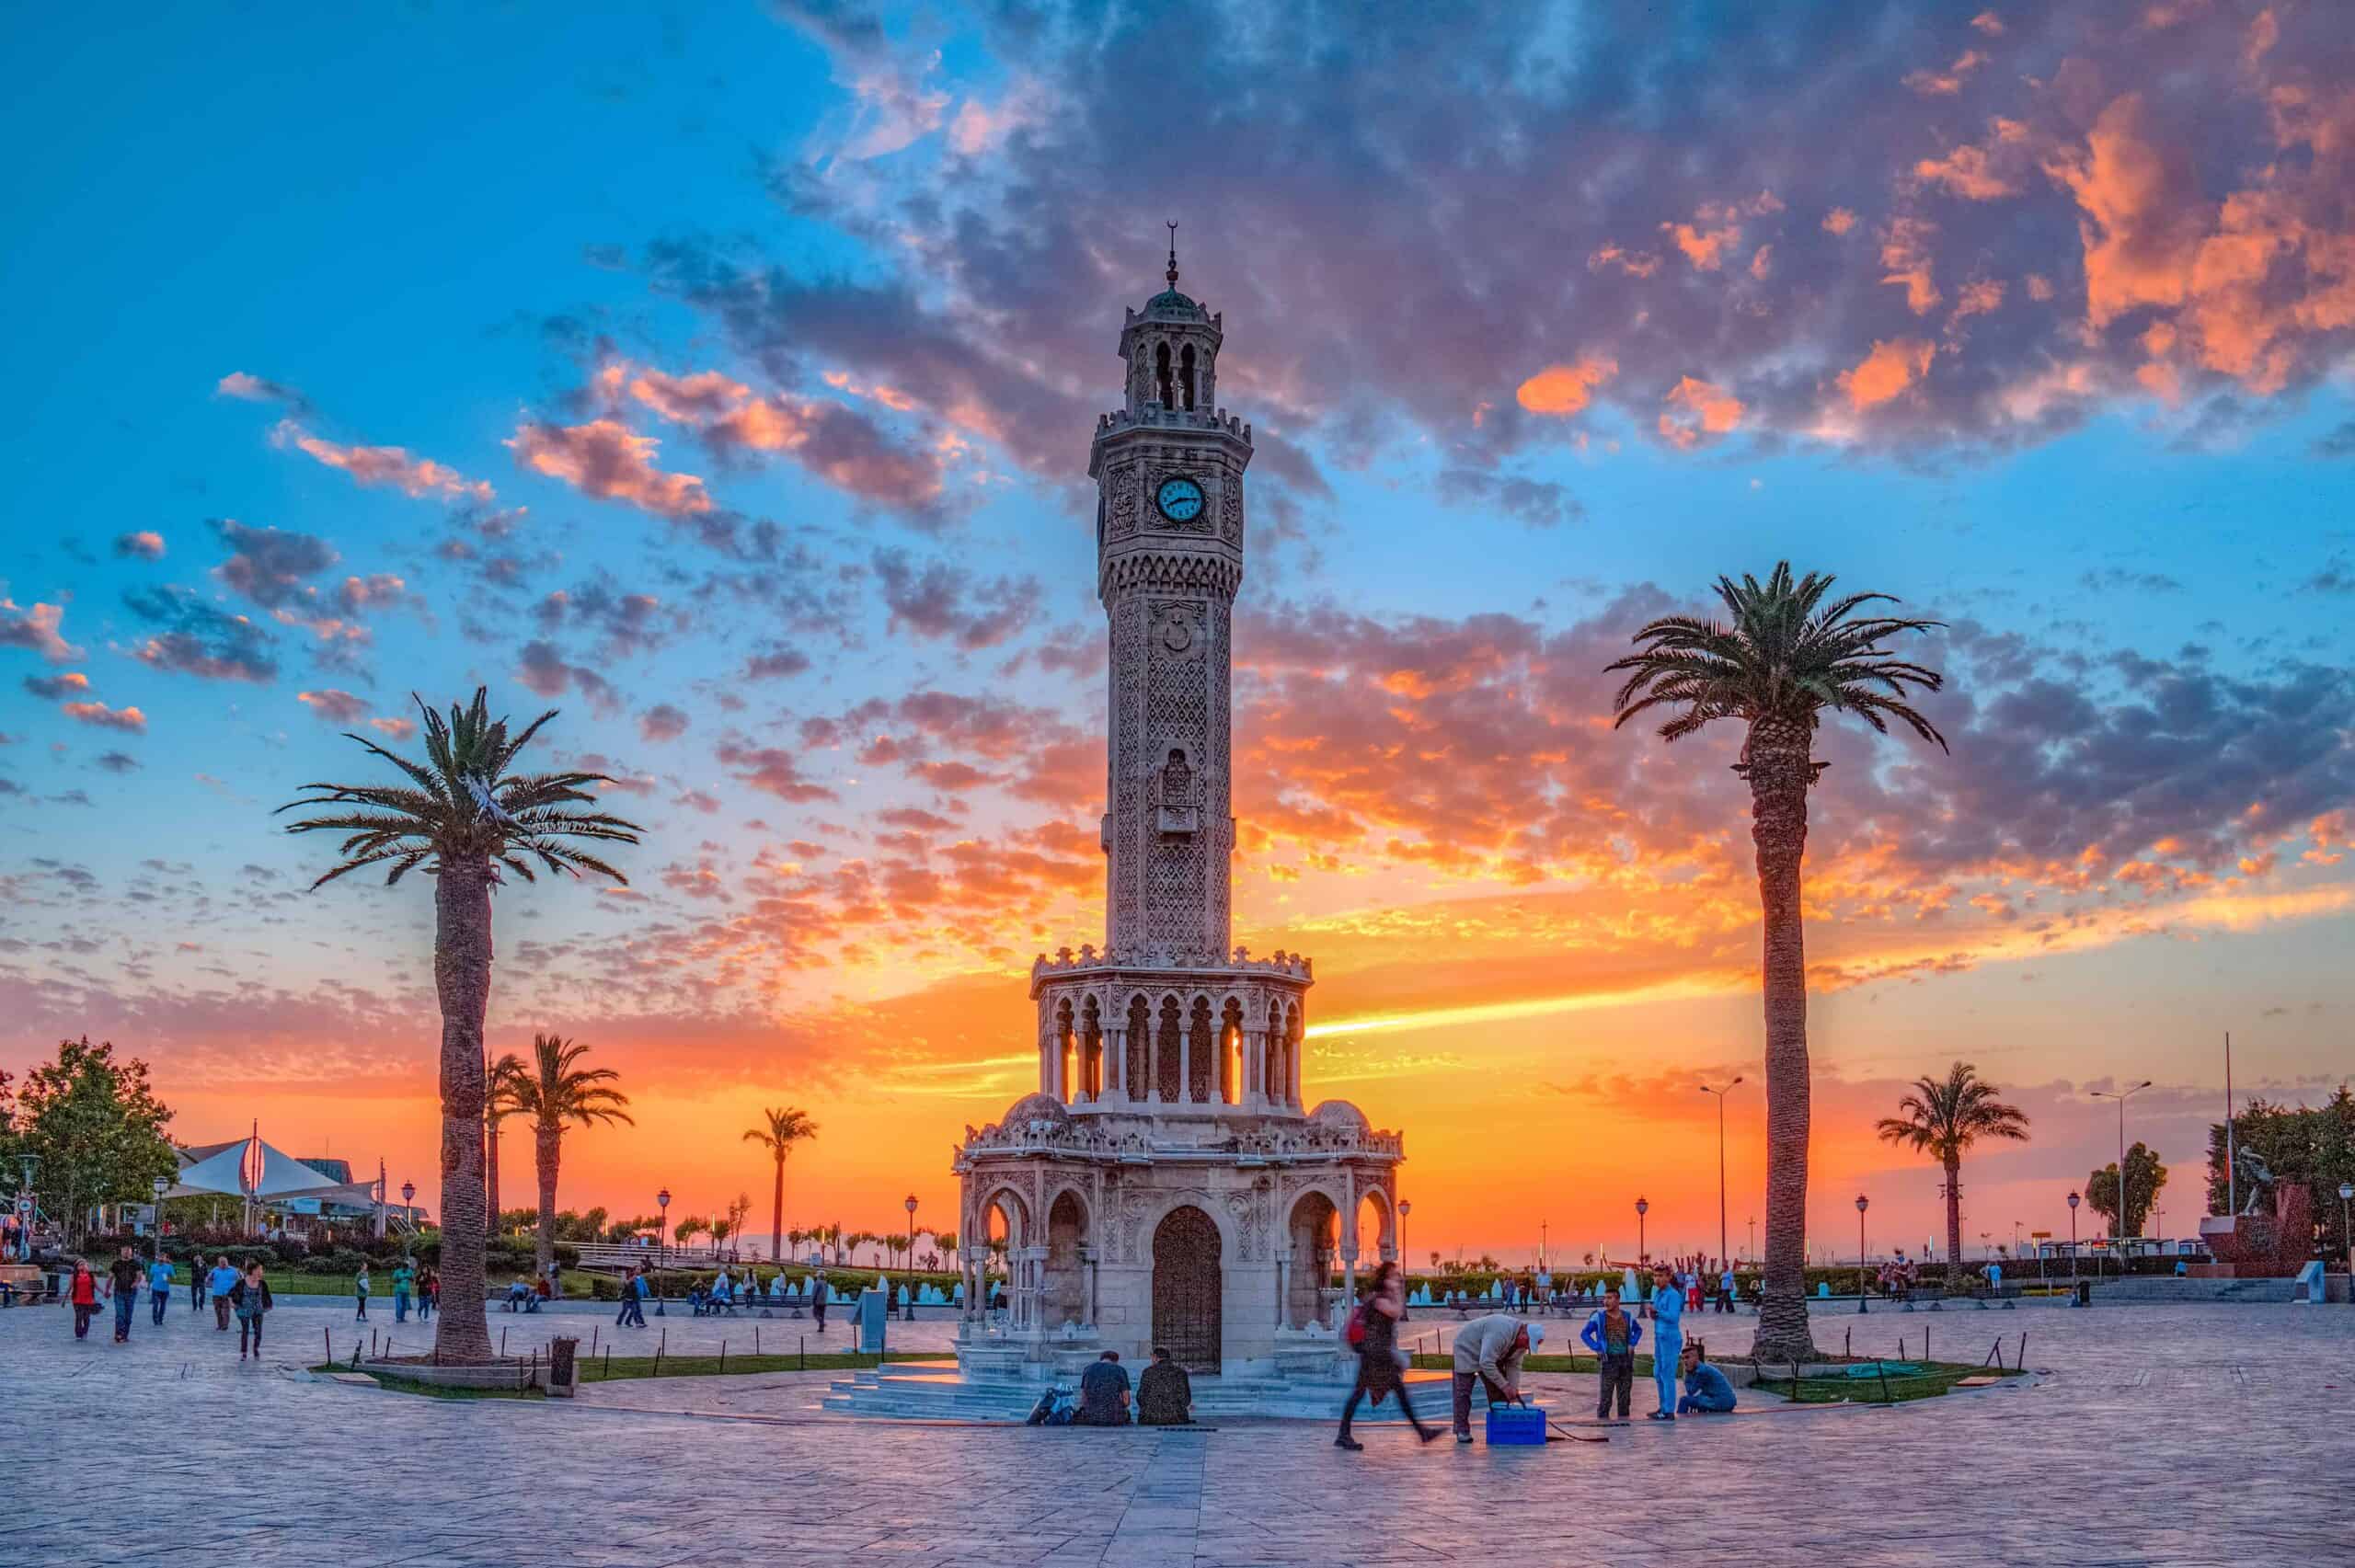 İzmir Saat Kulesi, Konak